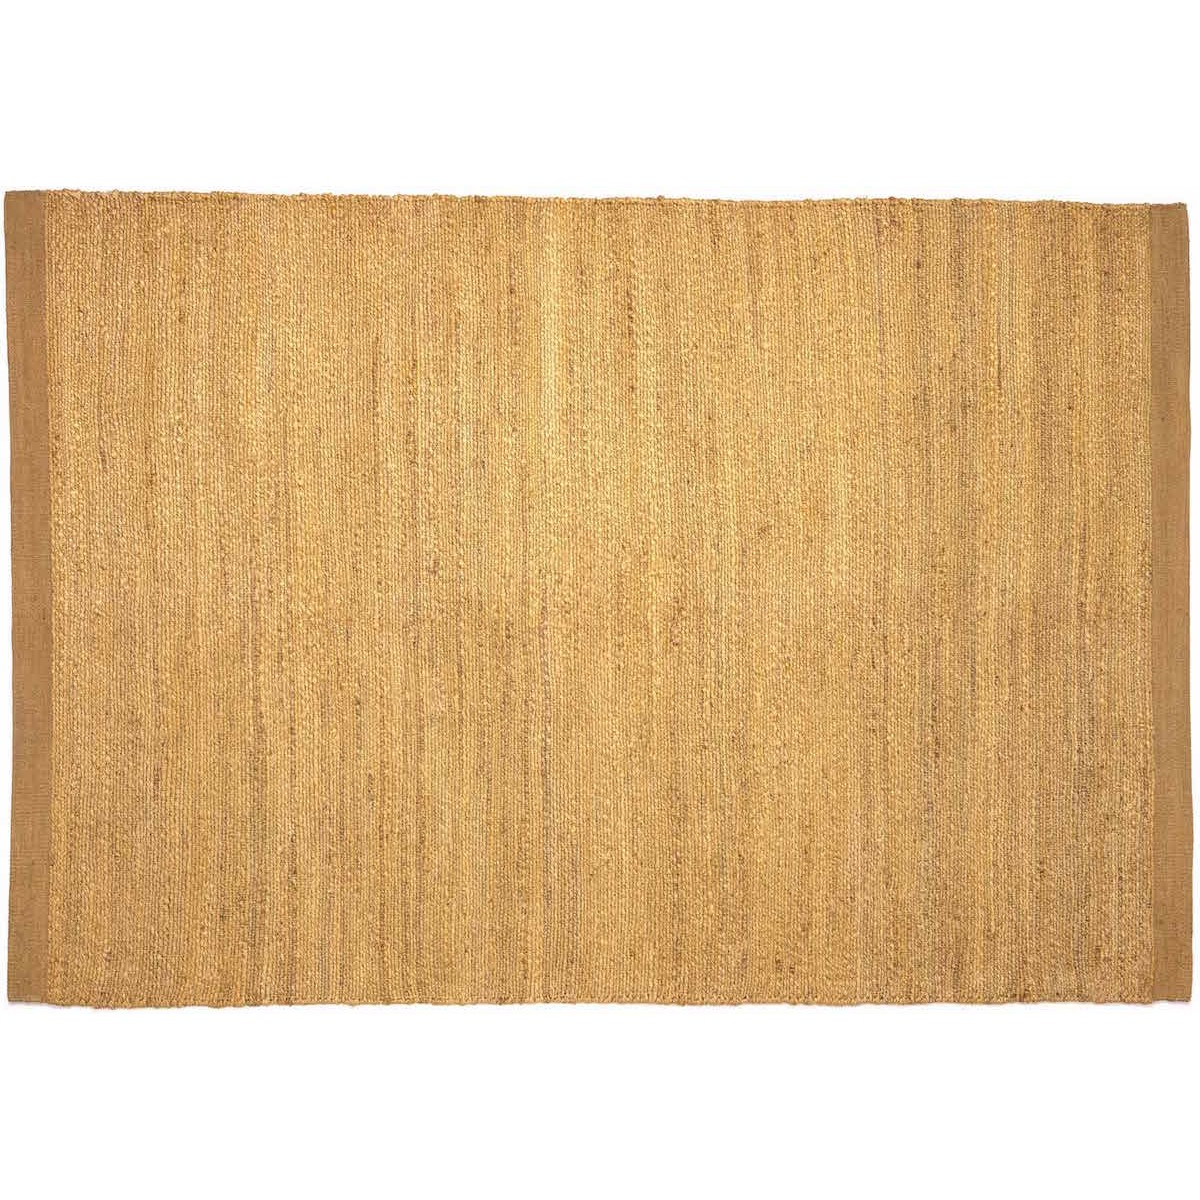 250x350cm - yellow - Herb rug